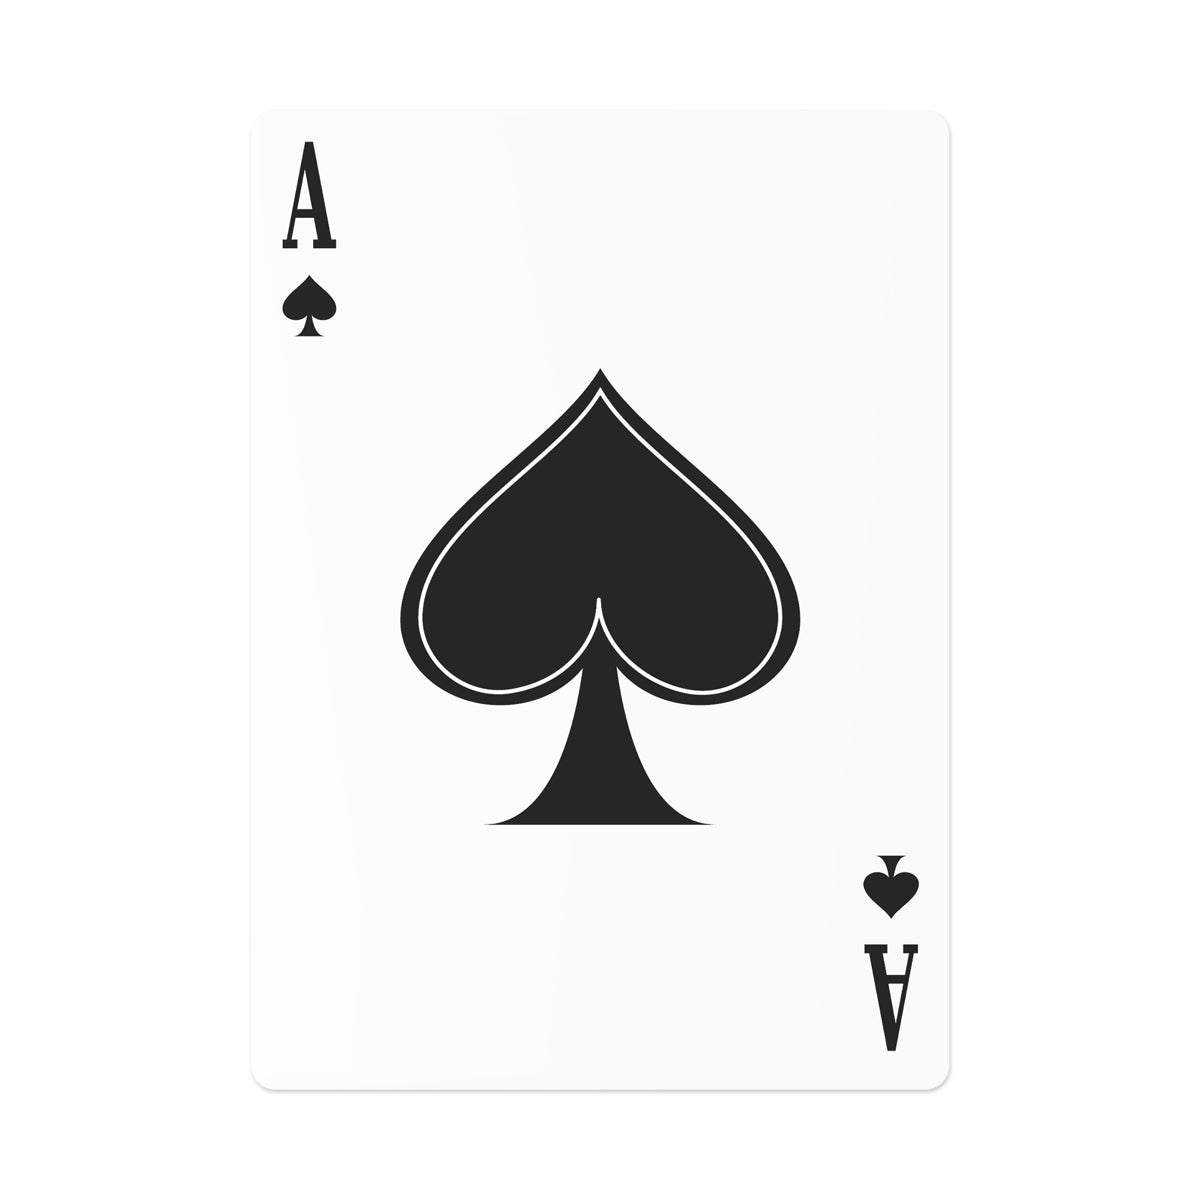 Poker Cards: Horsehead & Flame Nebula